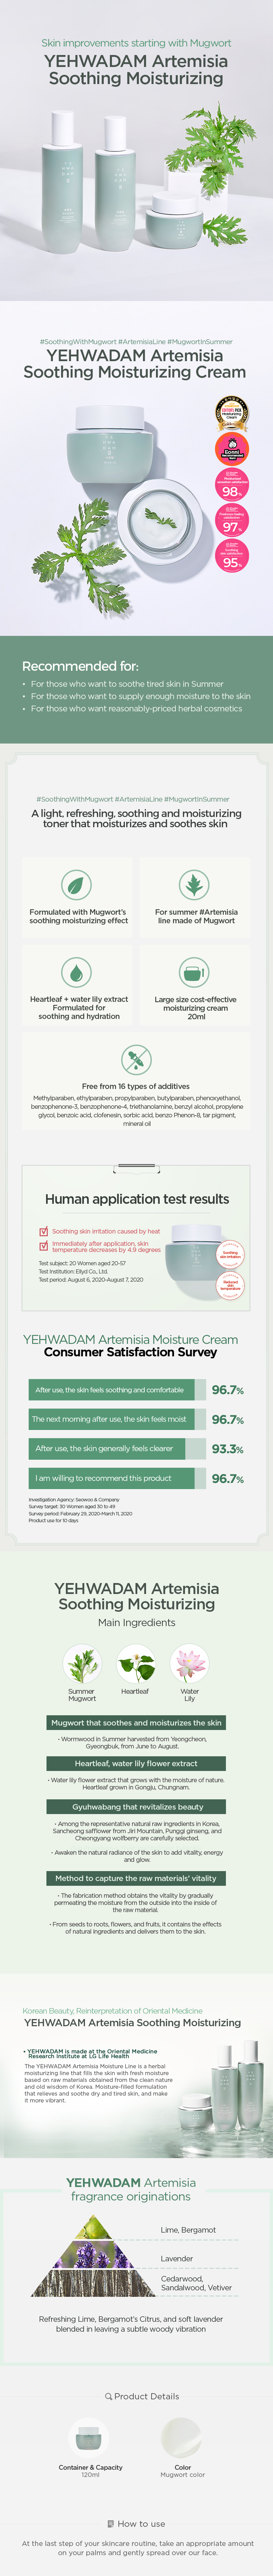 Yehwadam Artemisia Soothing Moisturizing Cream